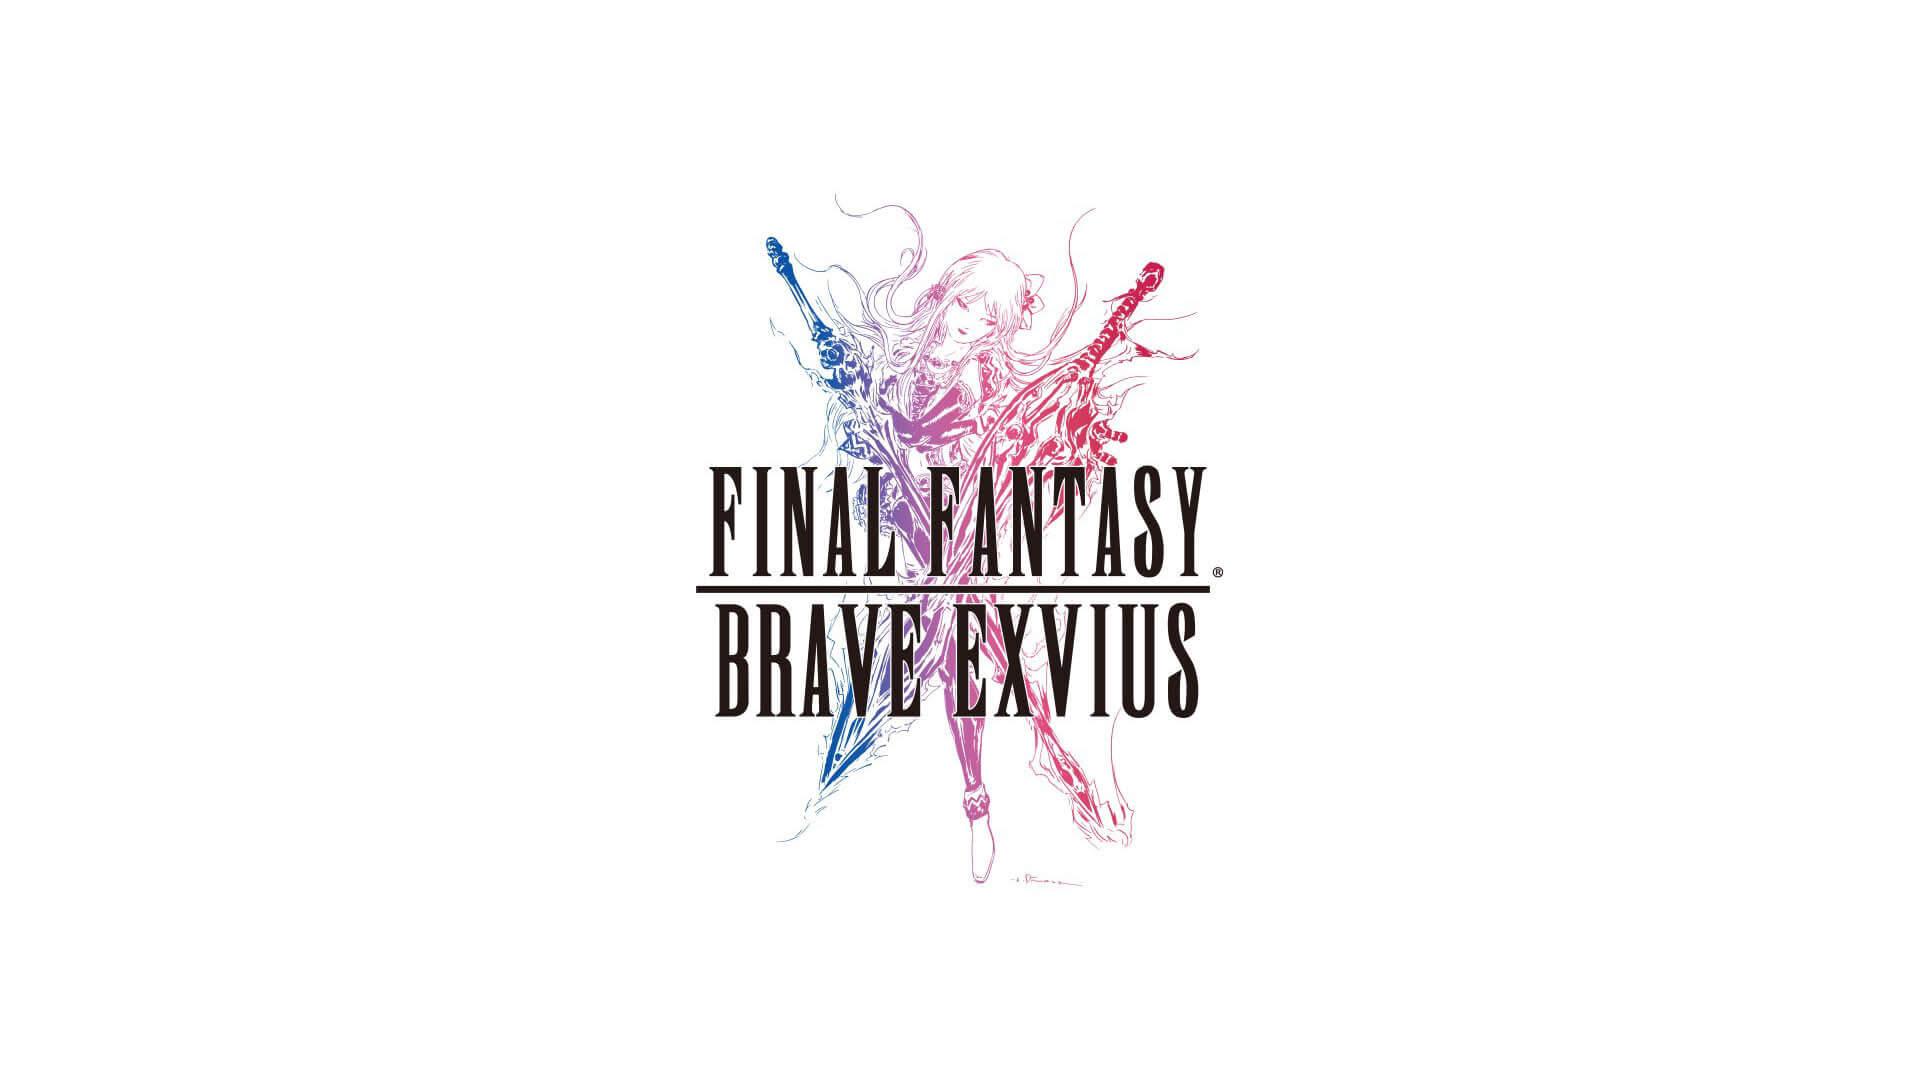 Final Fantasy Brave Exvius Logo 16 1463405346.05.2016 Png Jpgcopy Kopie